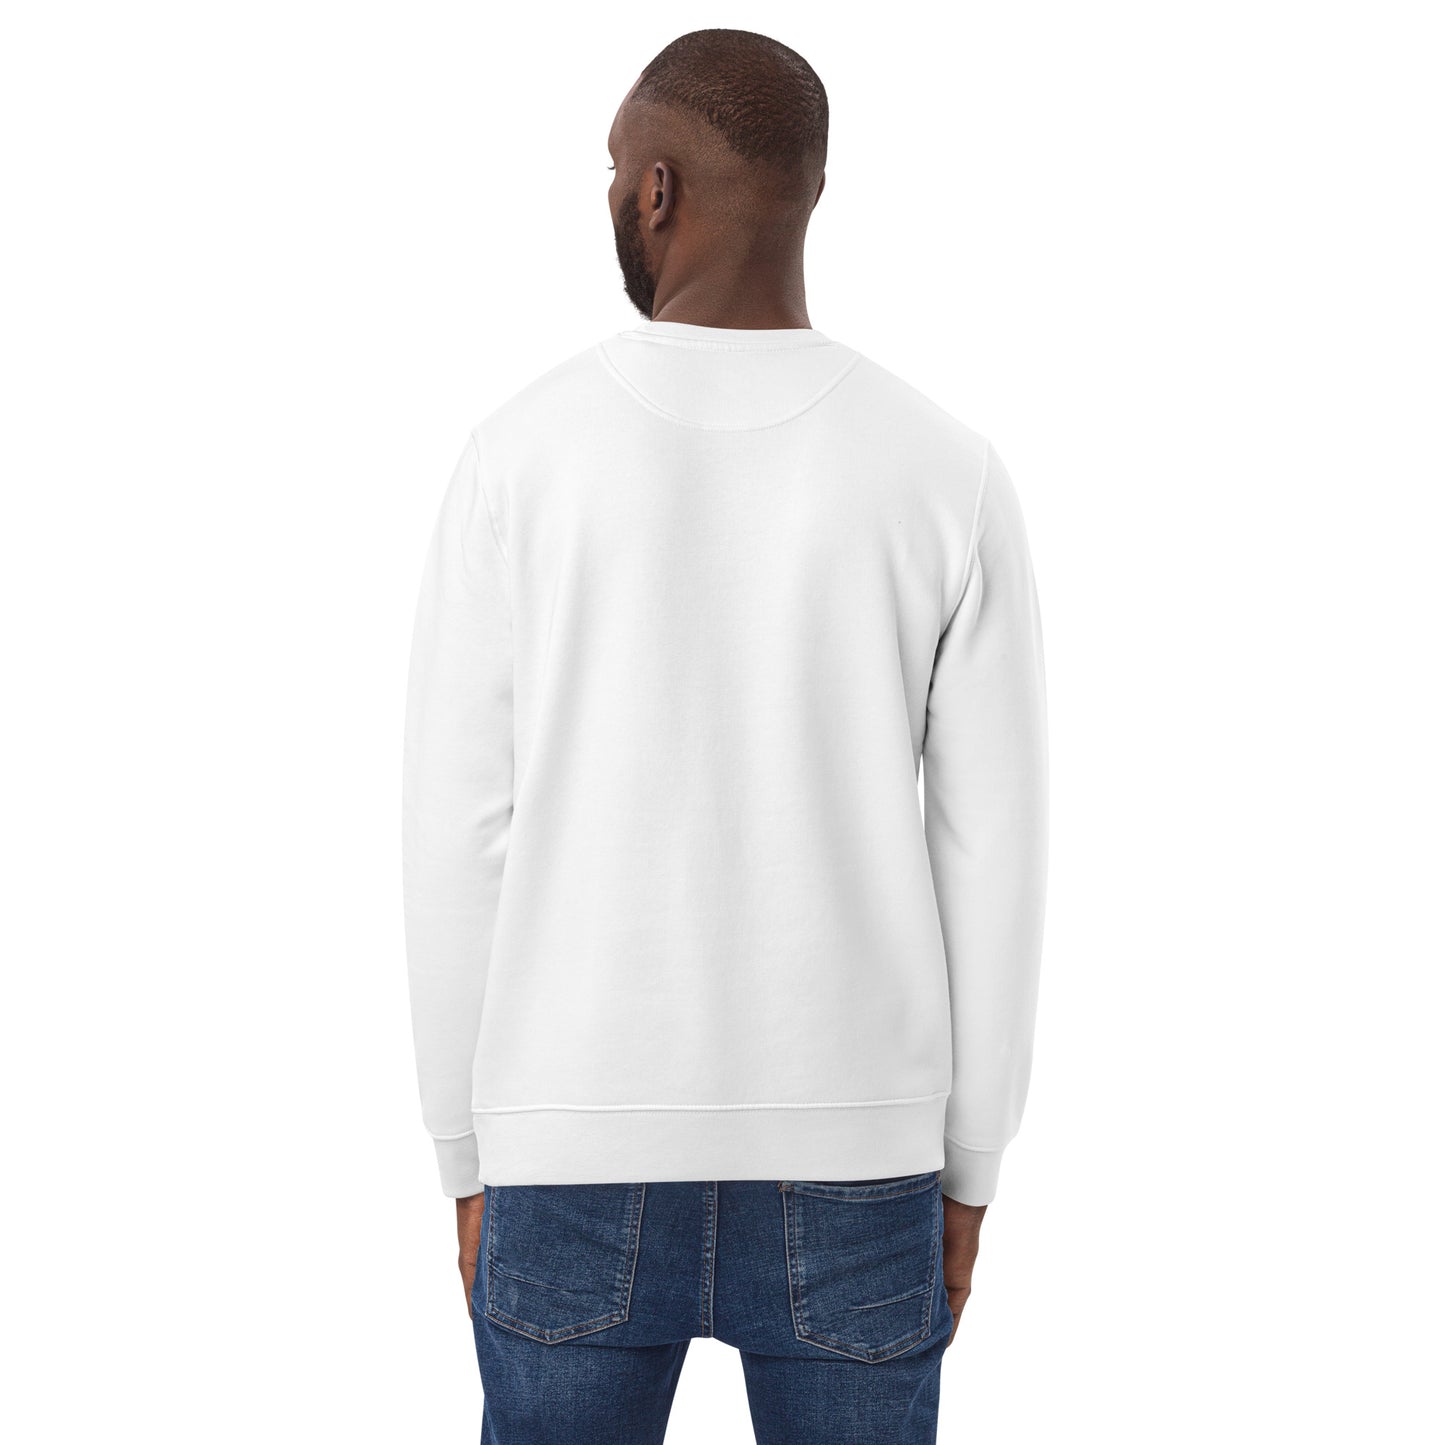 TE012.3- Unisex Bio-Pullover - Sweater - Sweatshirt -  Social Media Trend - Ya Manyak, Ya 7Haywan 1 - black logo